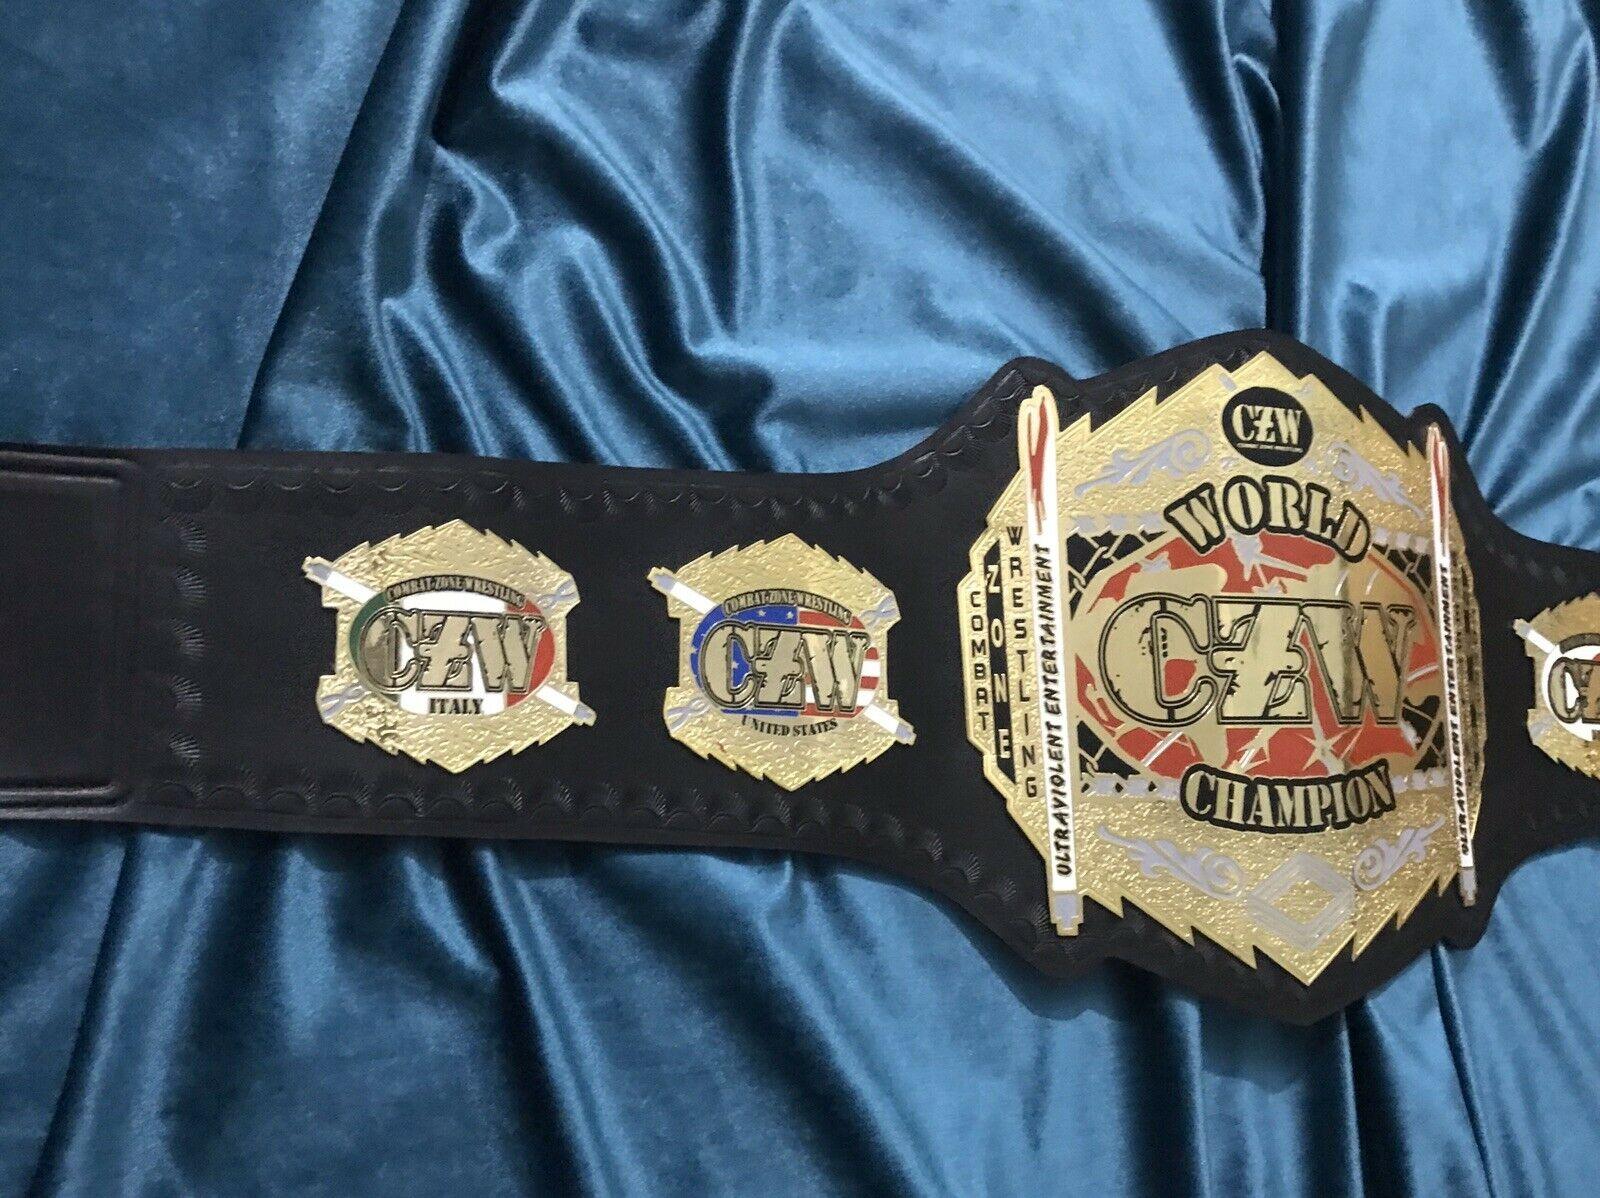 CZW Championship Belt - Zees Belts